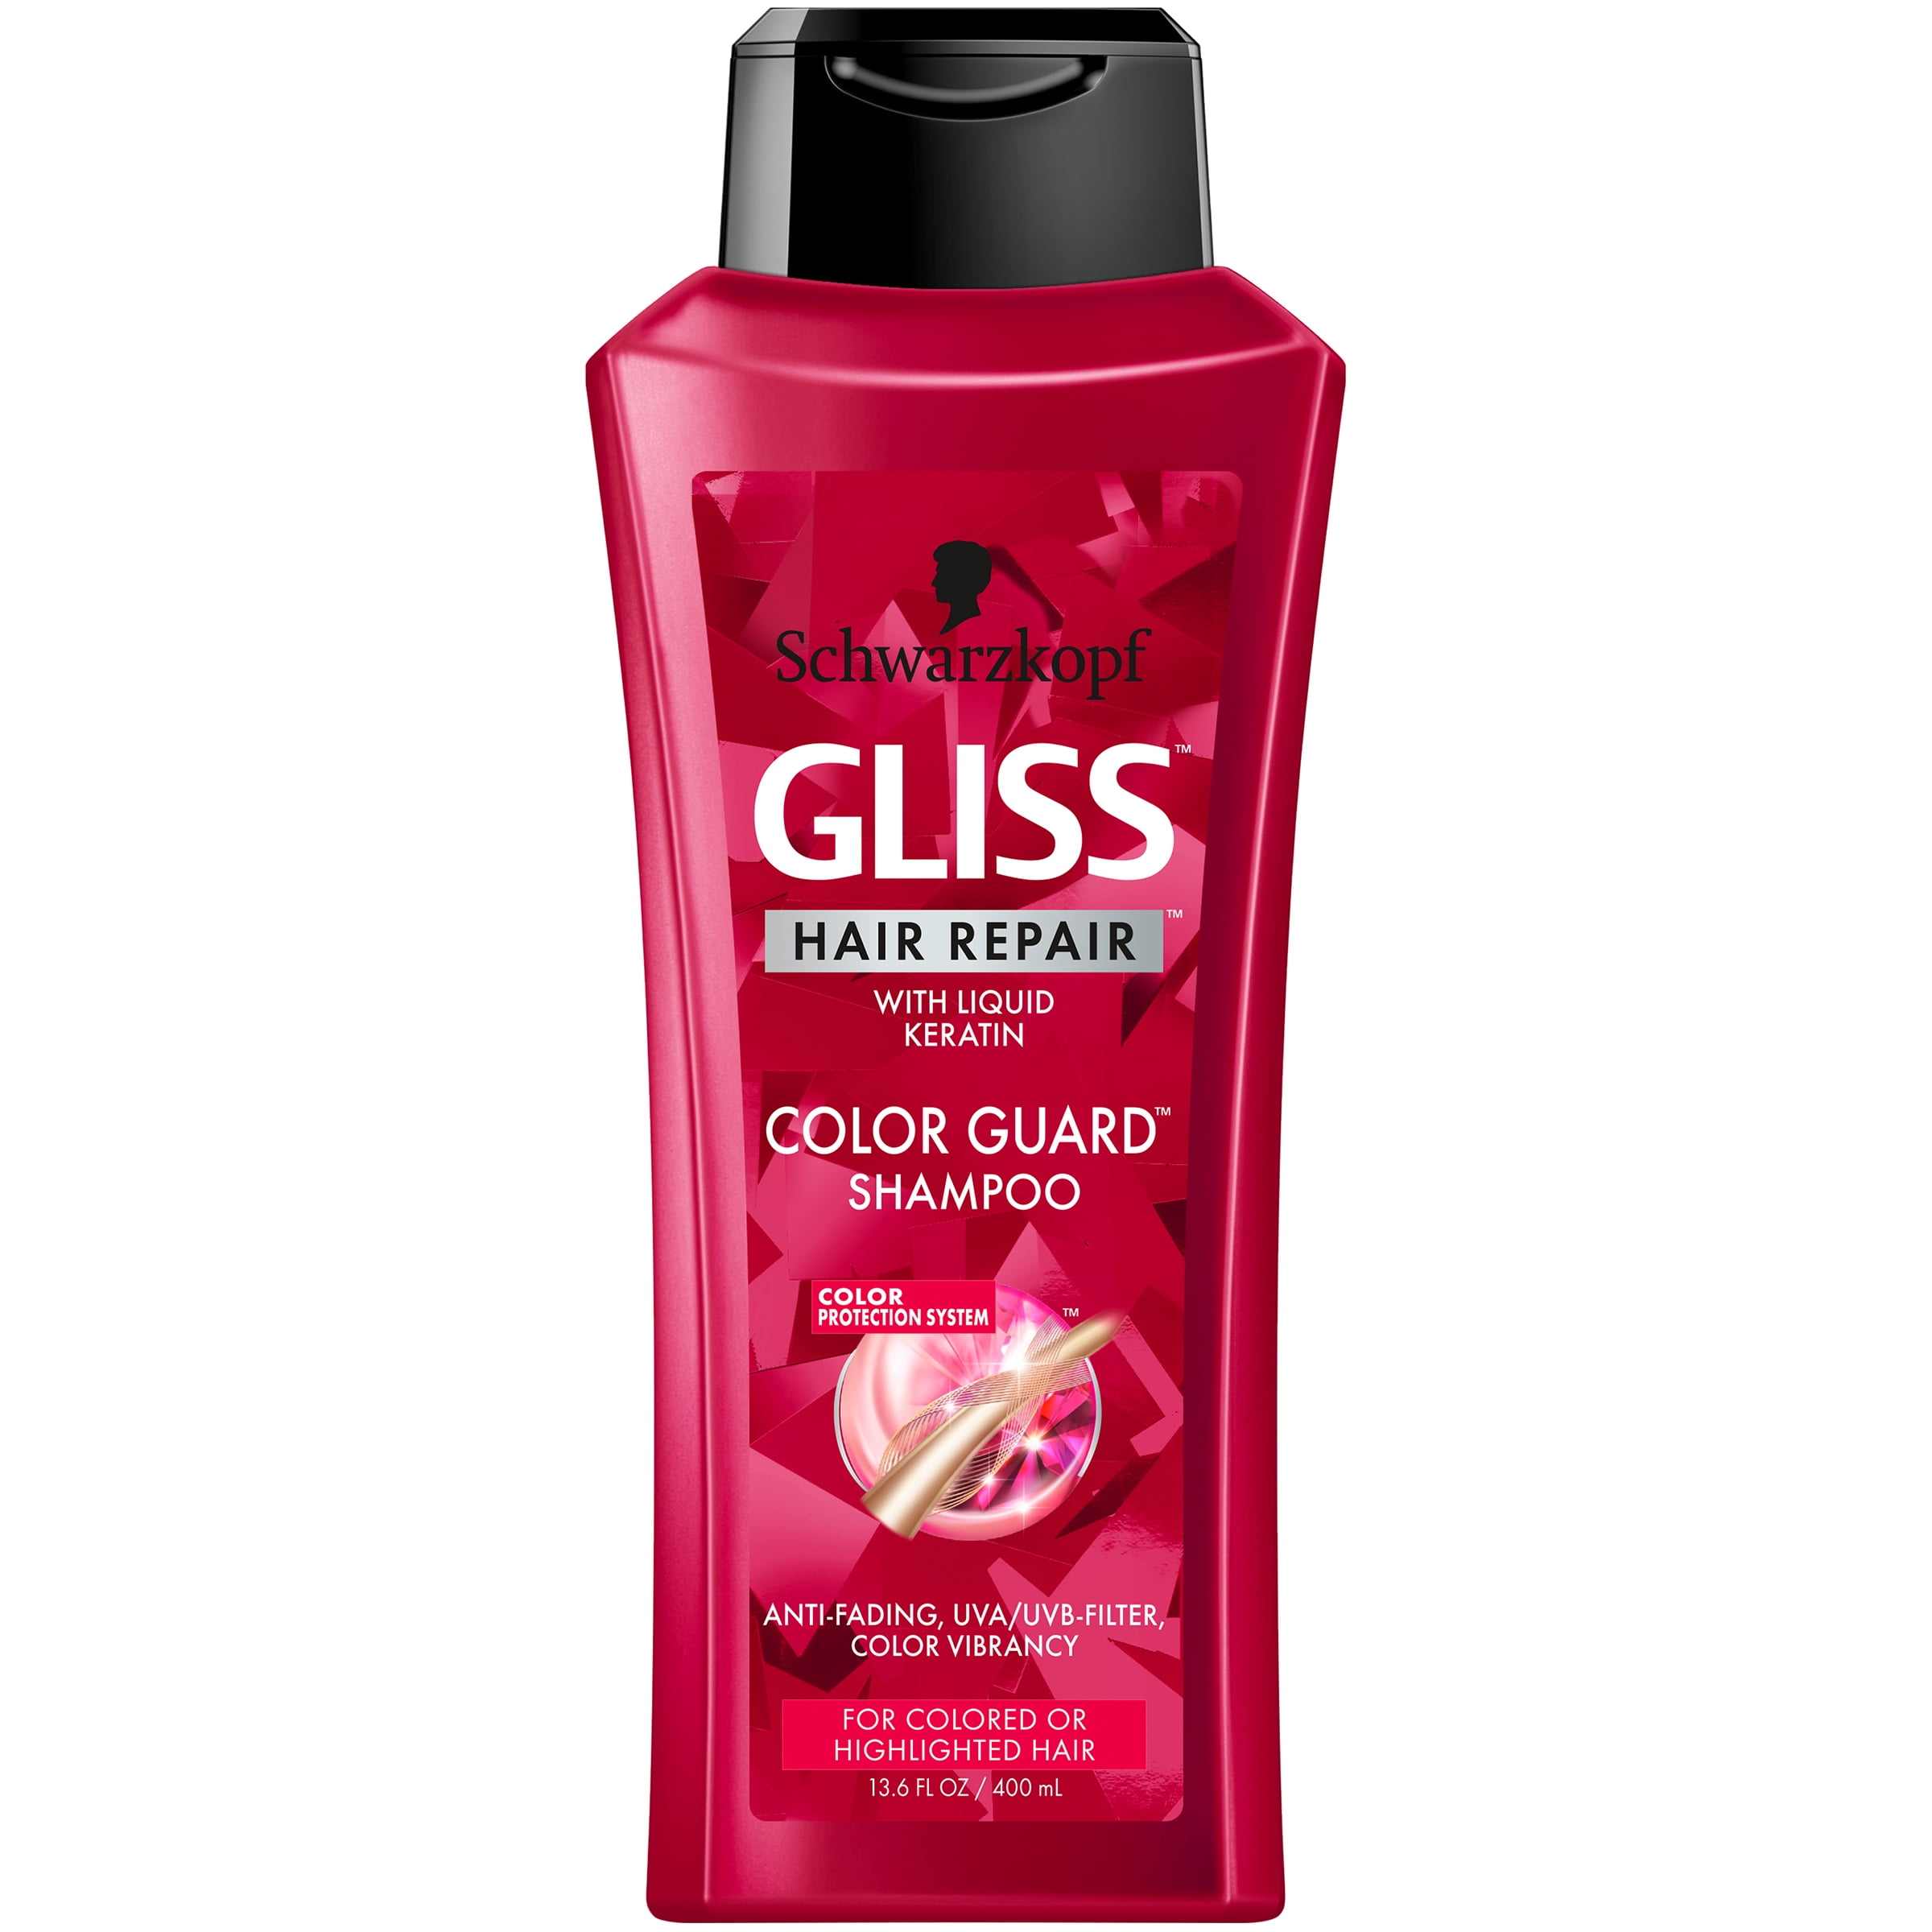 Gliss Repair Shampoo, Color Guard, Ounce Walmart.com